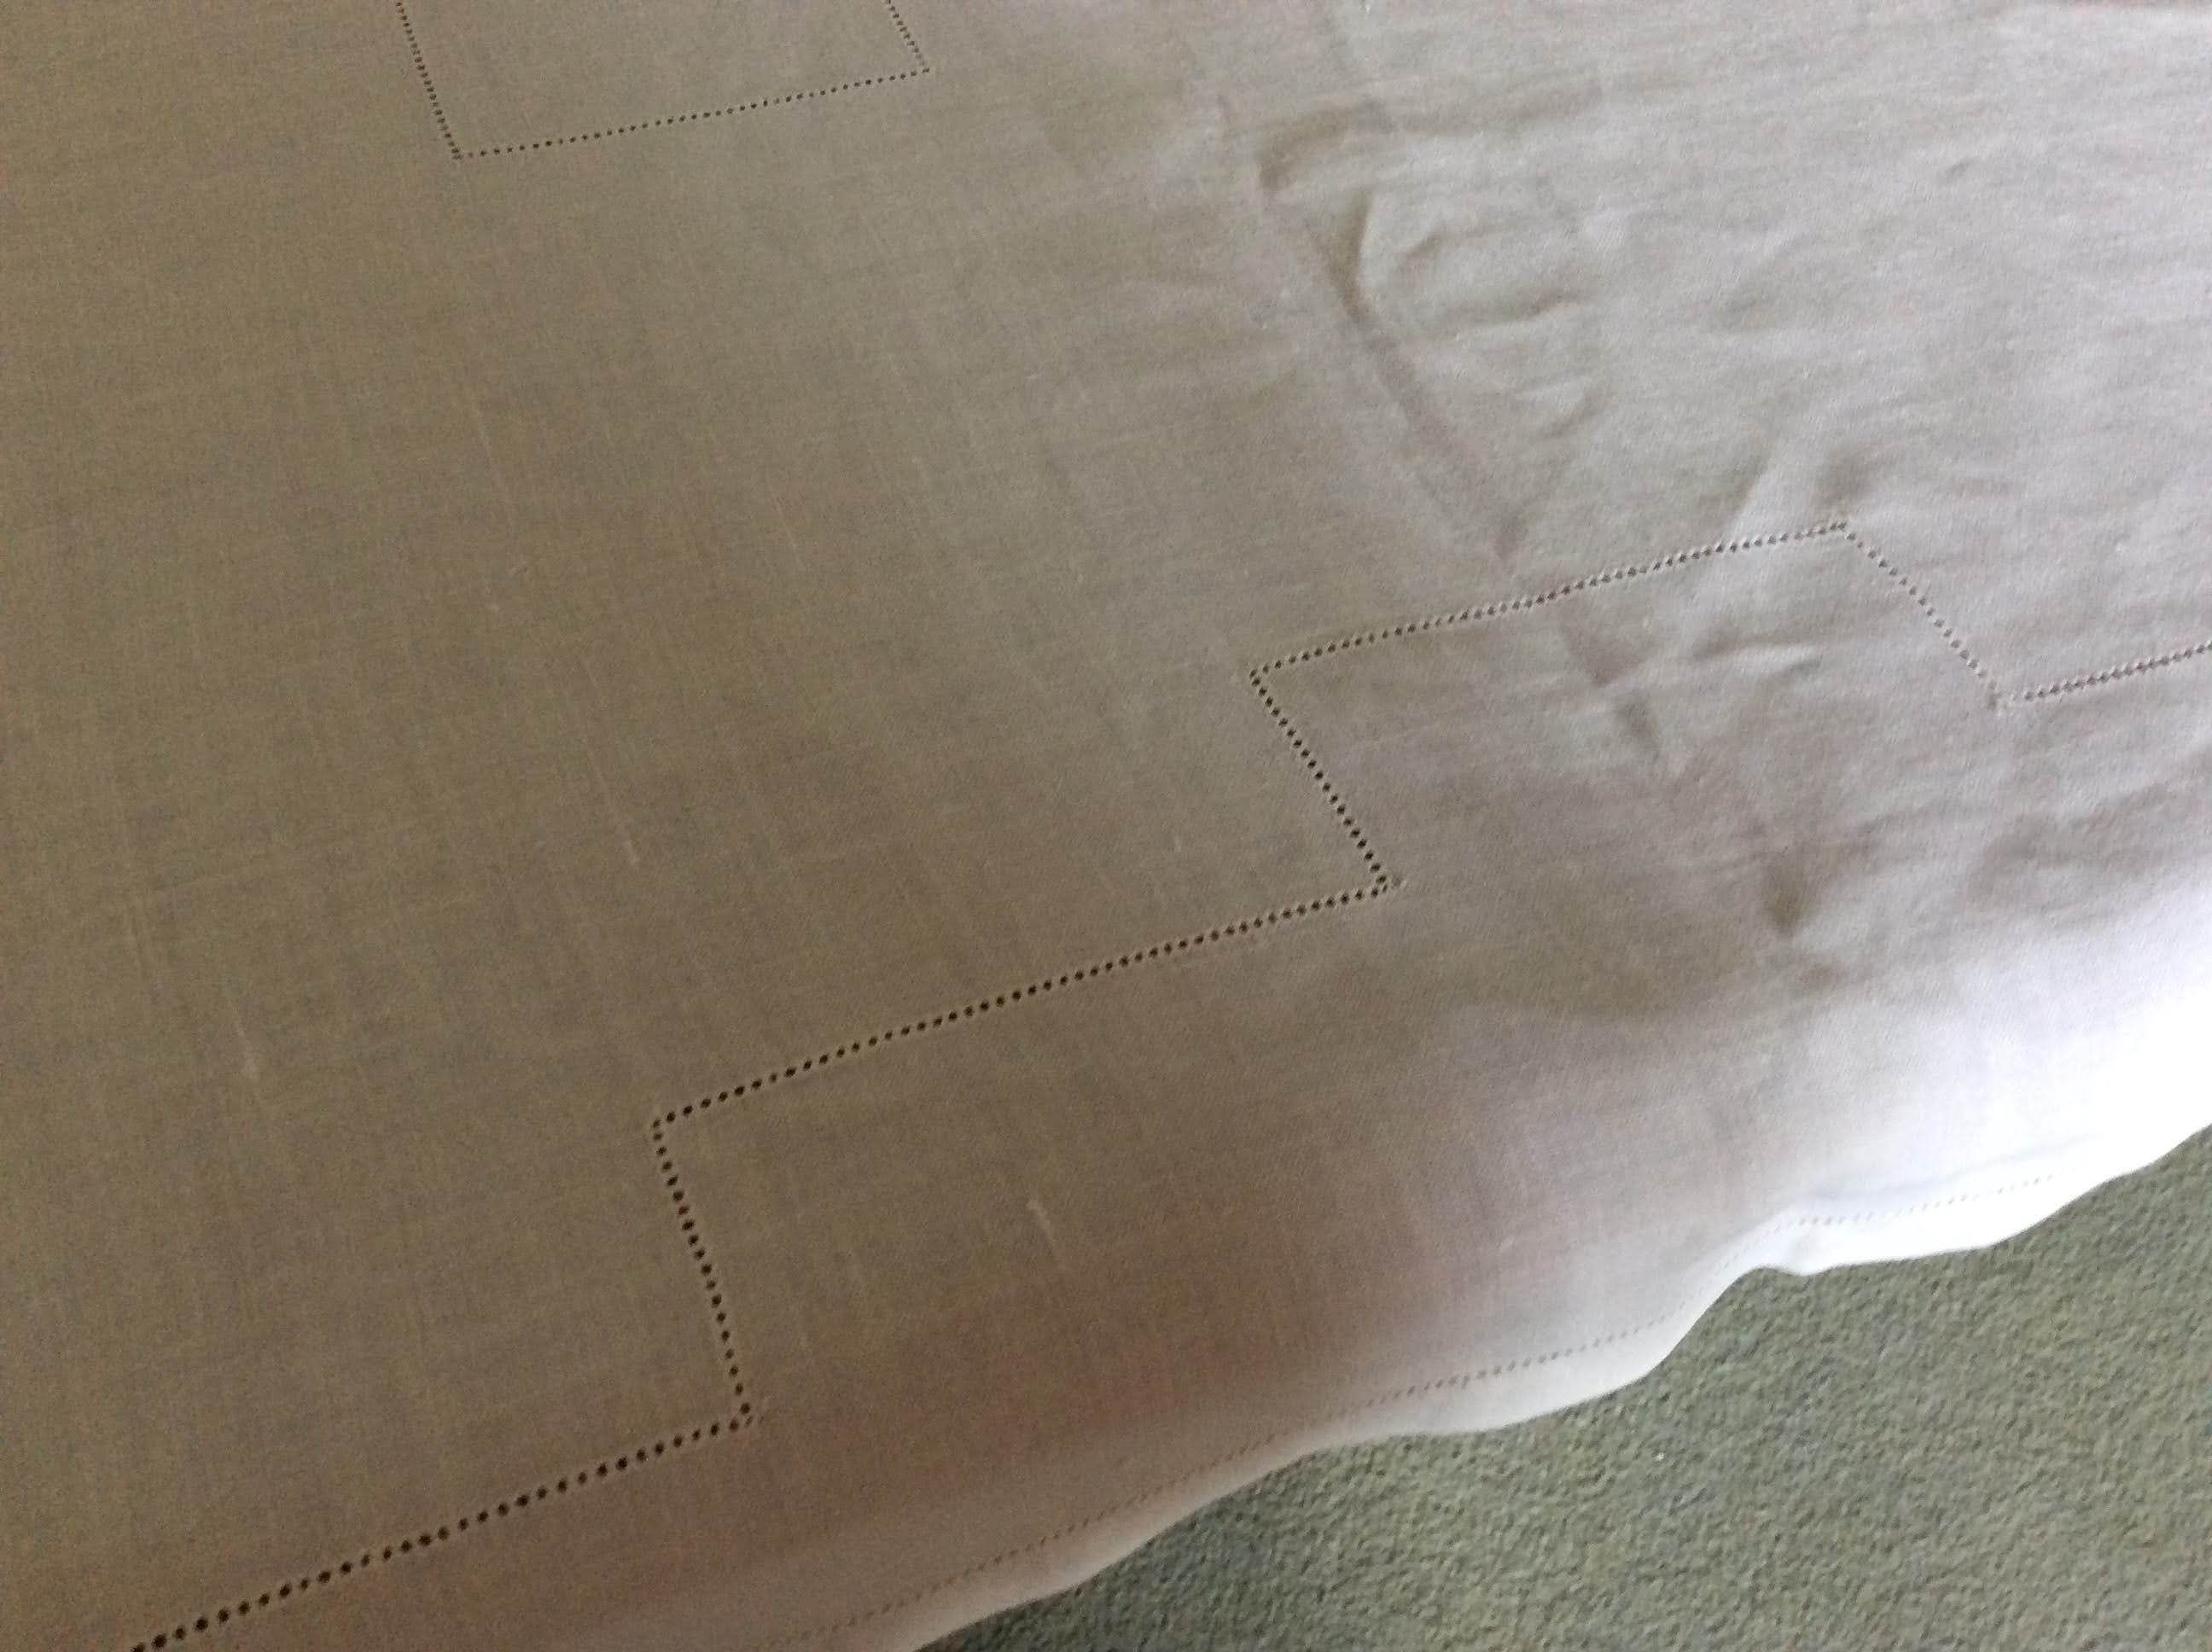 Vintage Linen Tablecloth - white